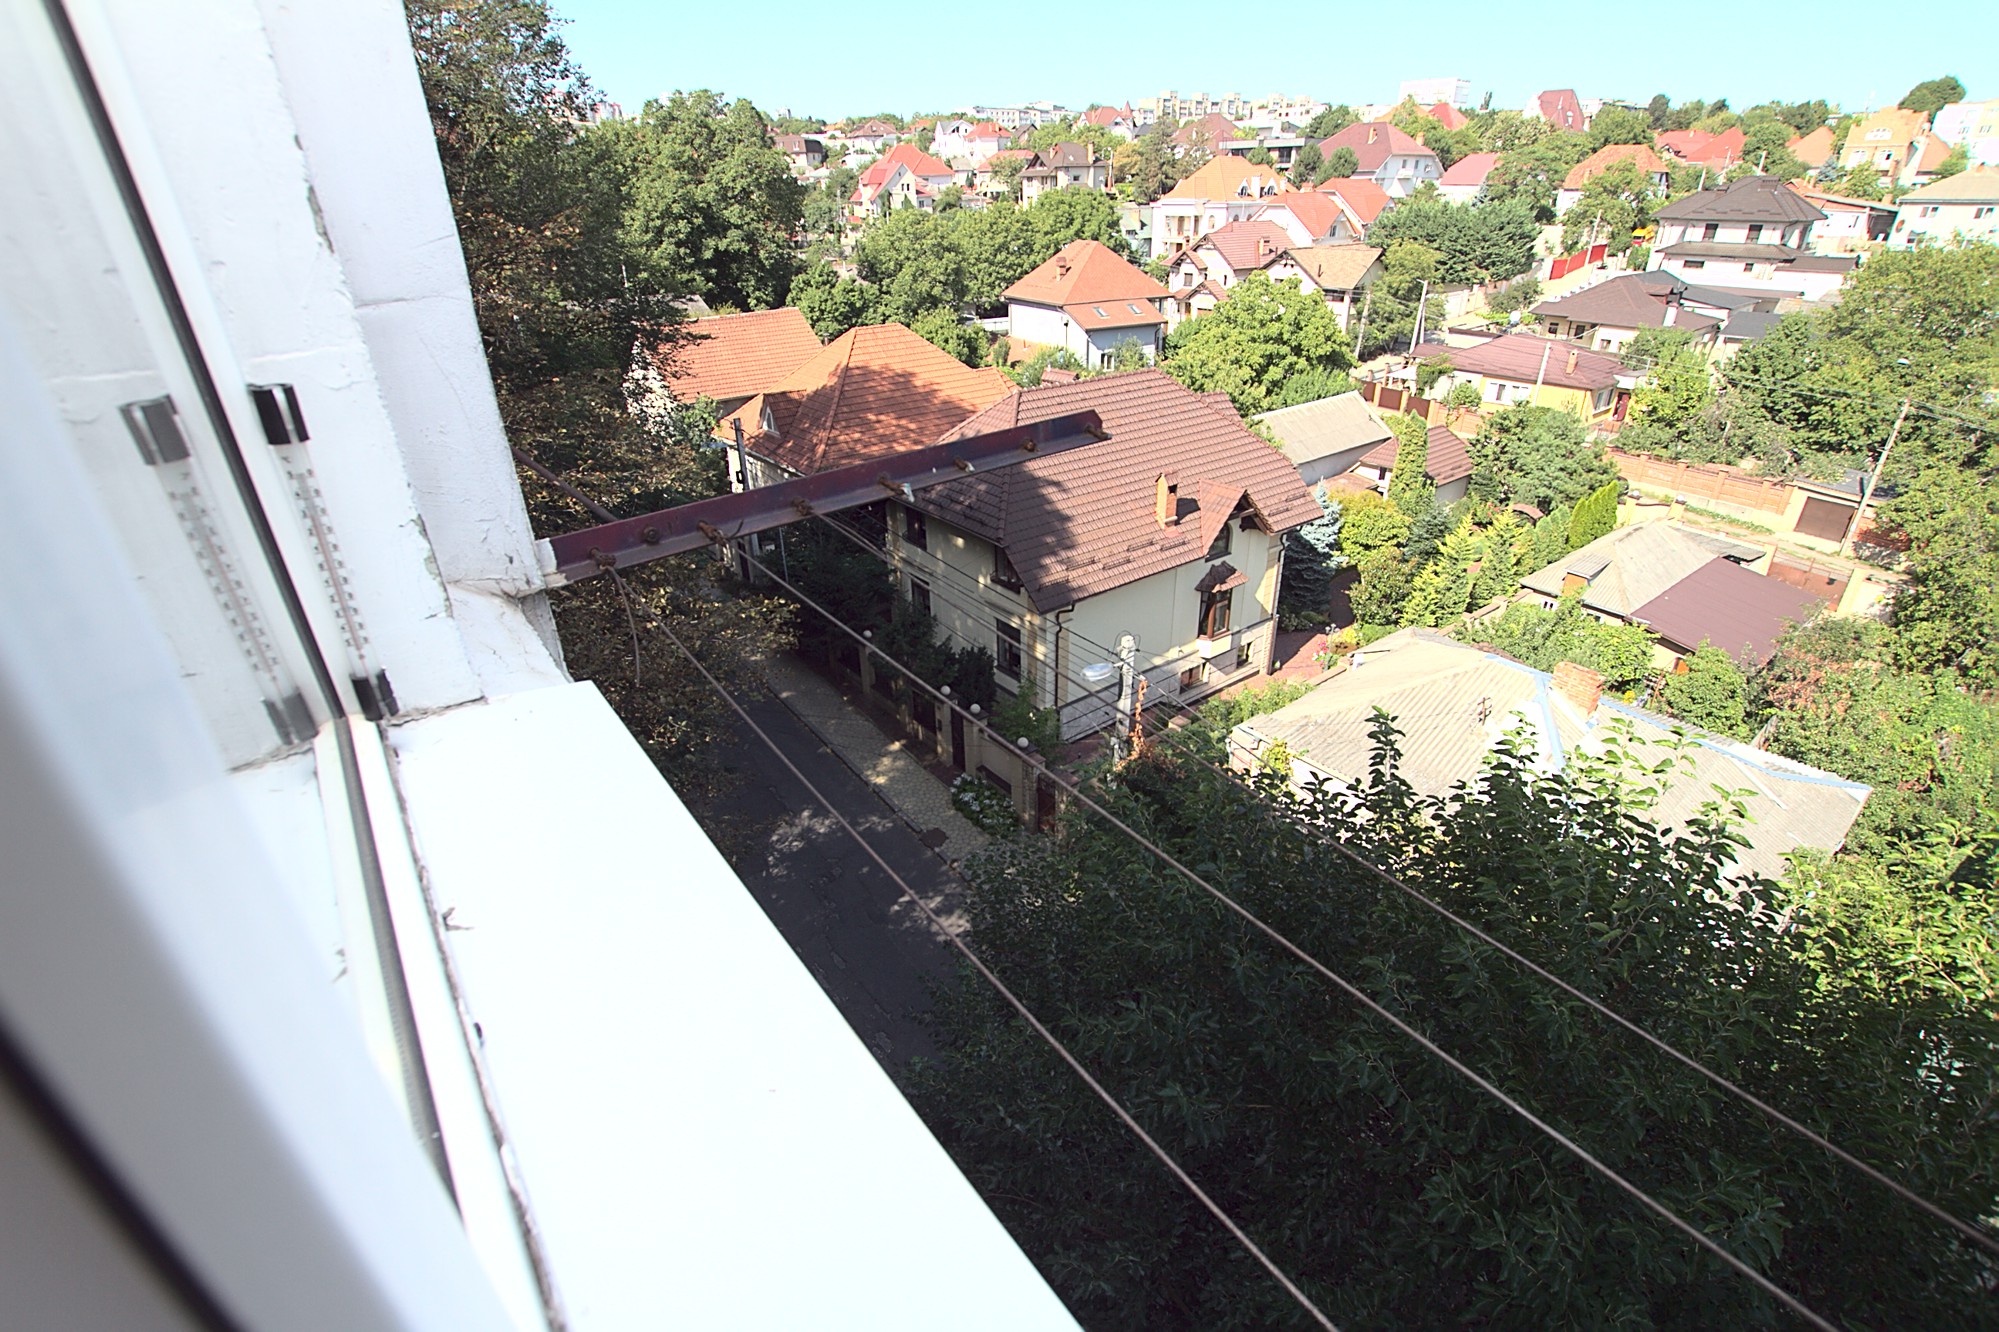 Elena's house ist ein 1 Zimmer Apartment zur Miete in Chisinau, Moldova